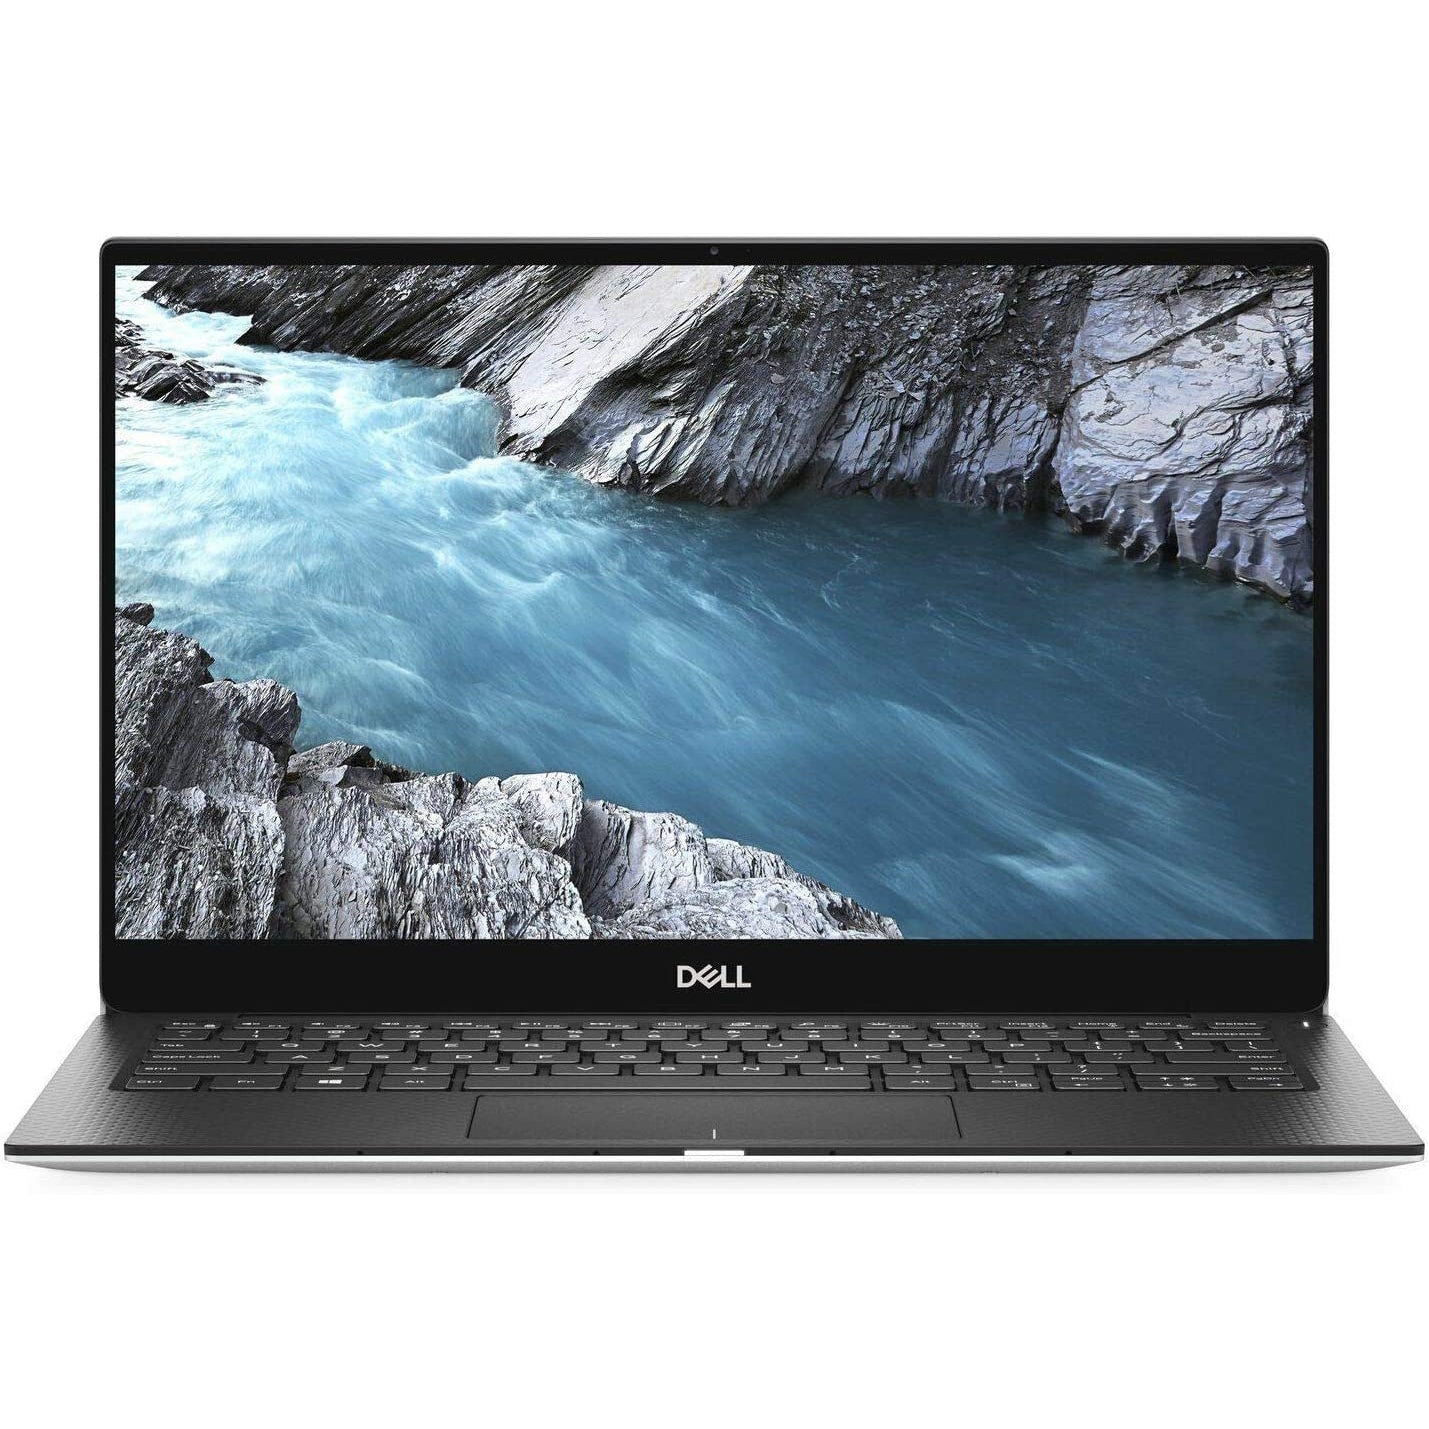 Dell XPS 13 9380 Laptop, Intel Core i5, 8GB RAM, 256GB SSD, 13.3” Full HD, Silver